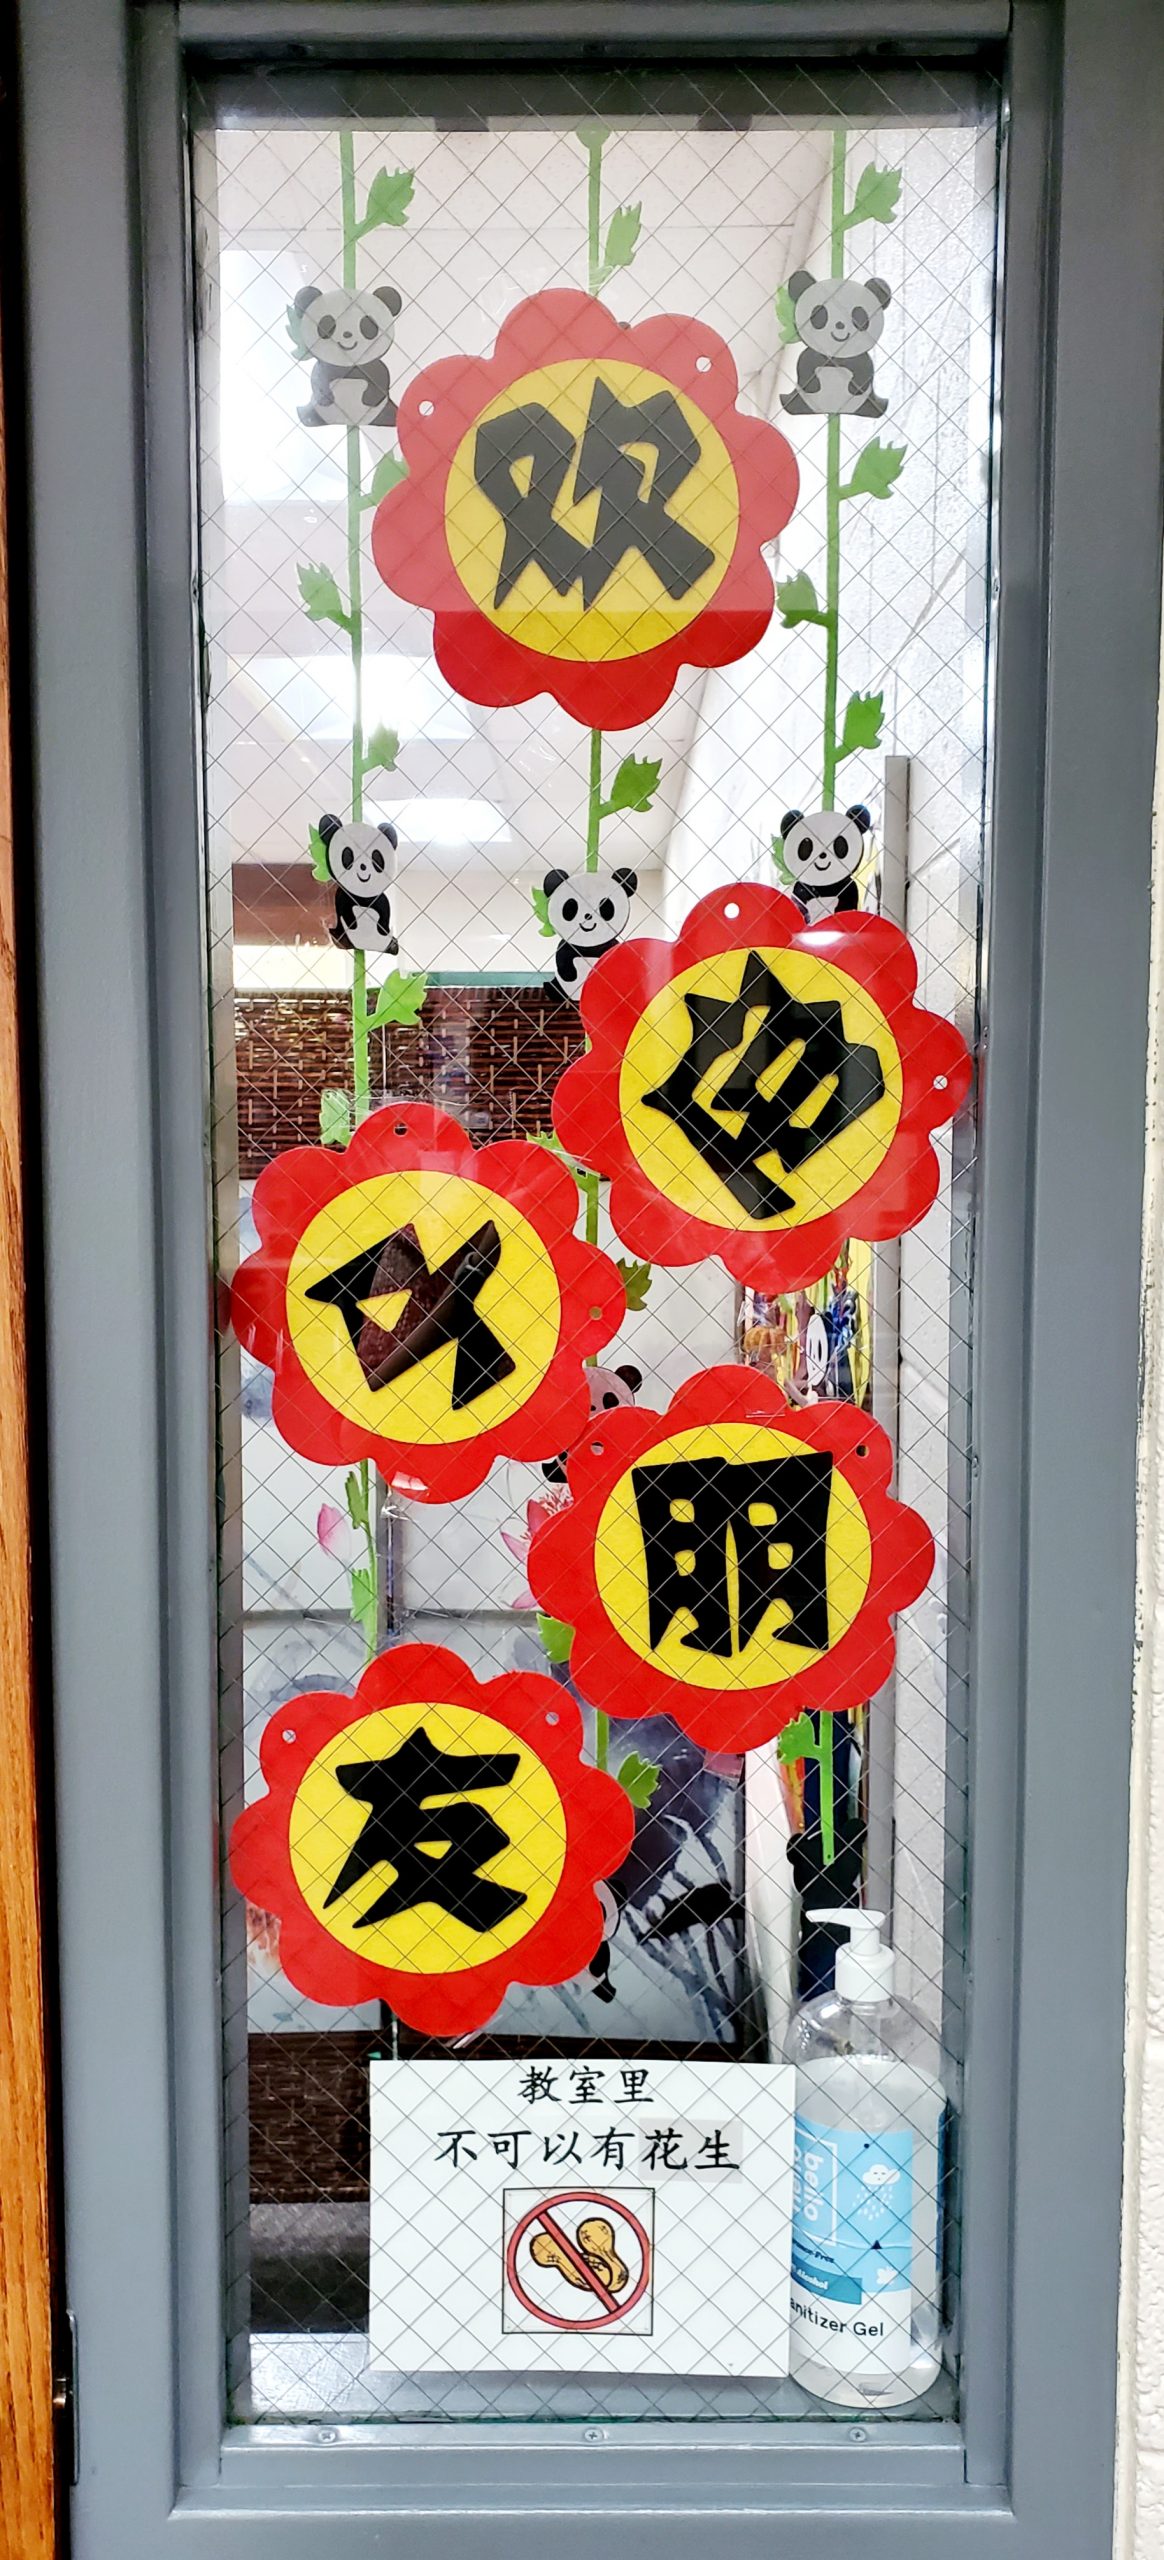 Chinese symbols on window of classroom